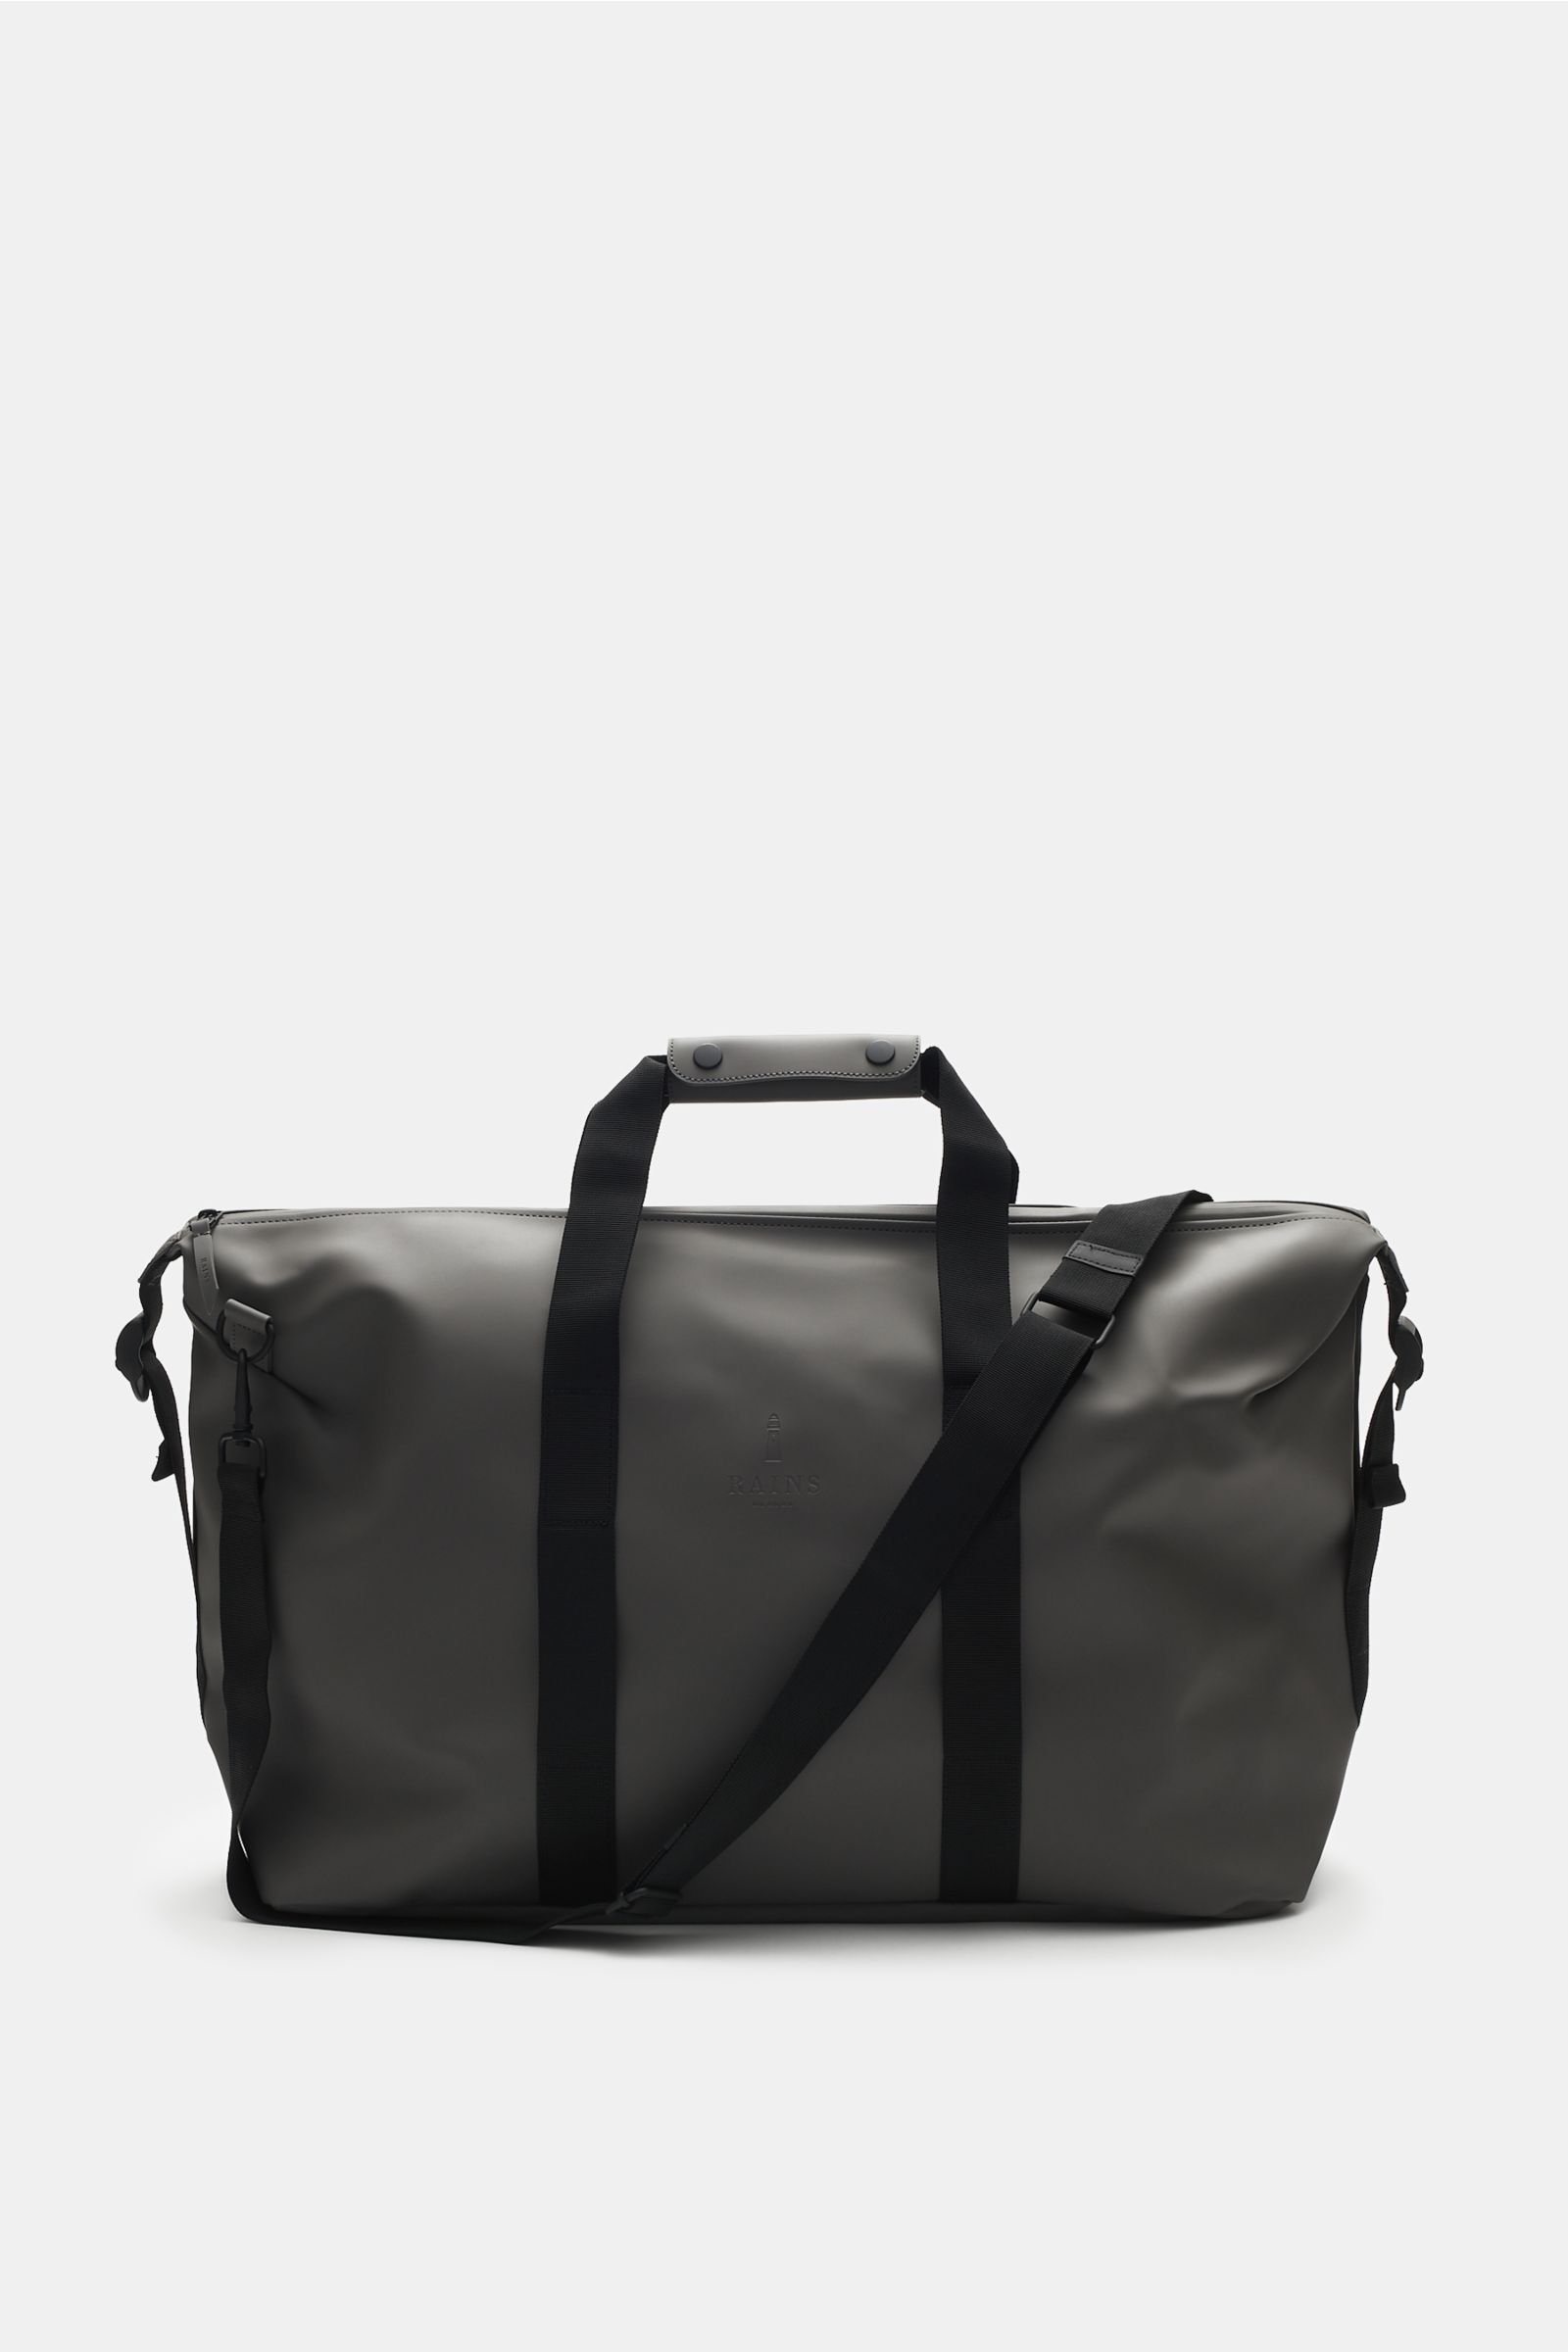 RAINS travel bag 'Weekend Bag' dark grey | BRAUN Hamburg